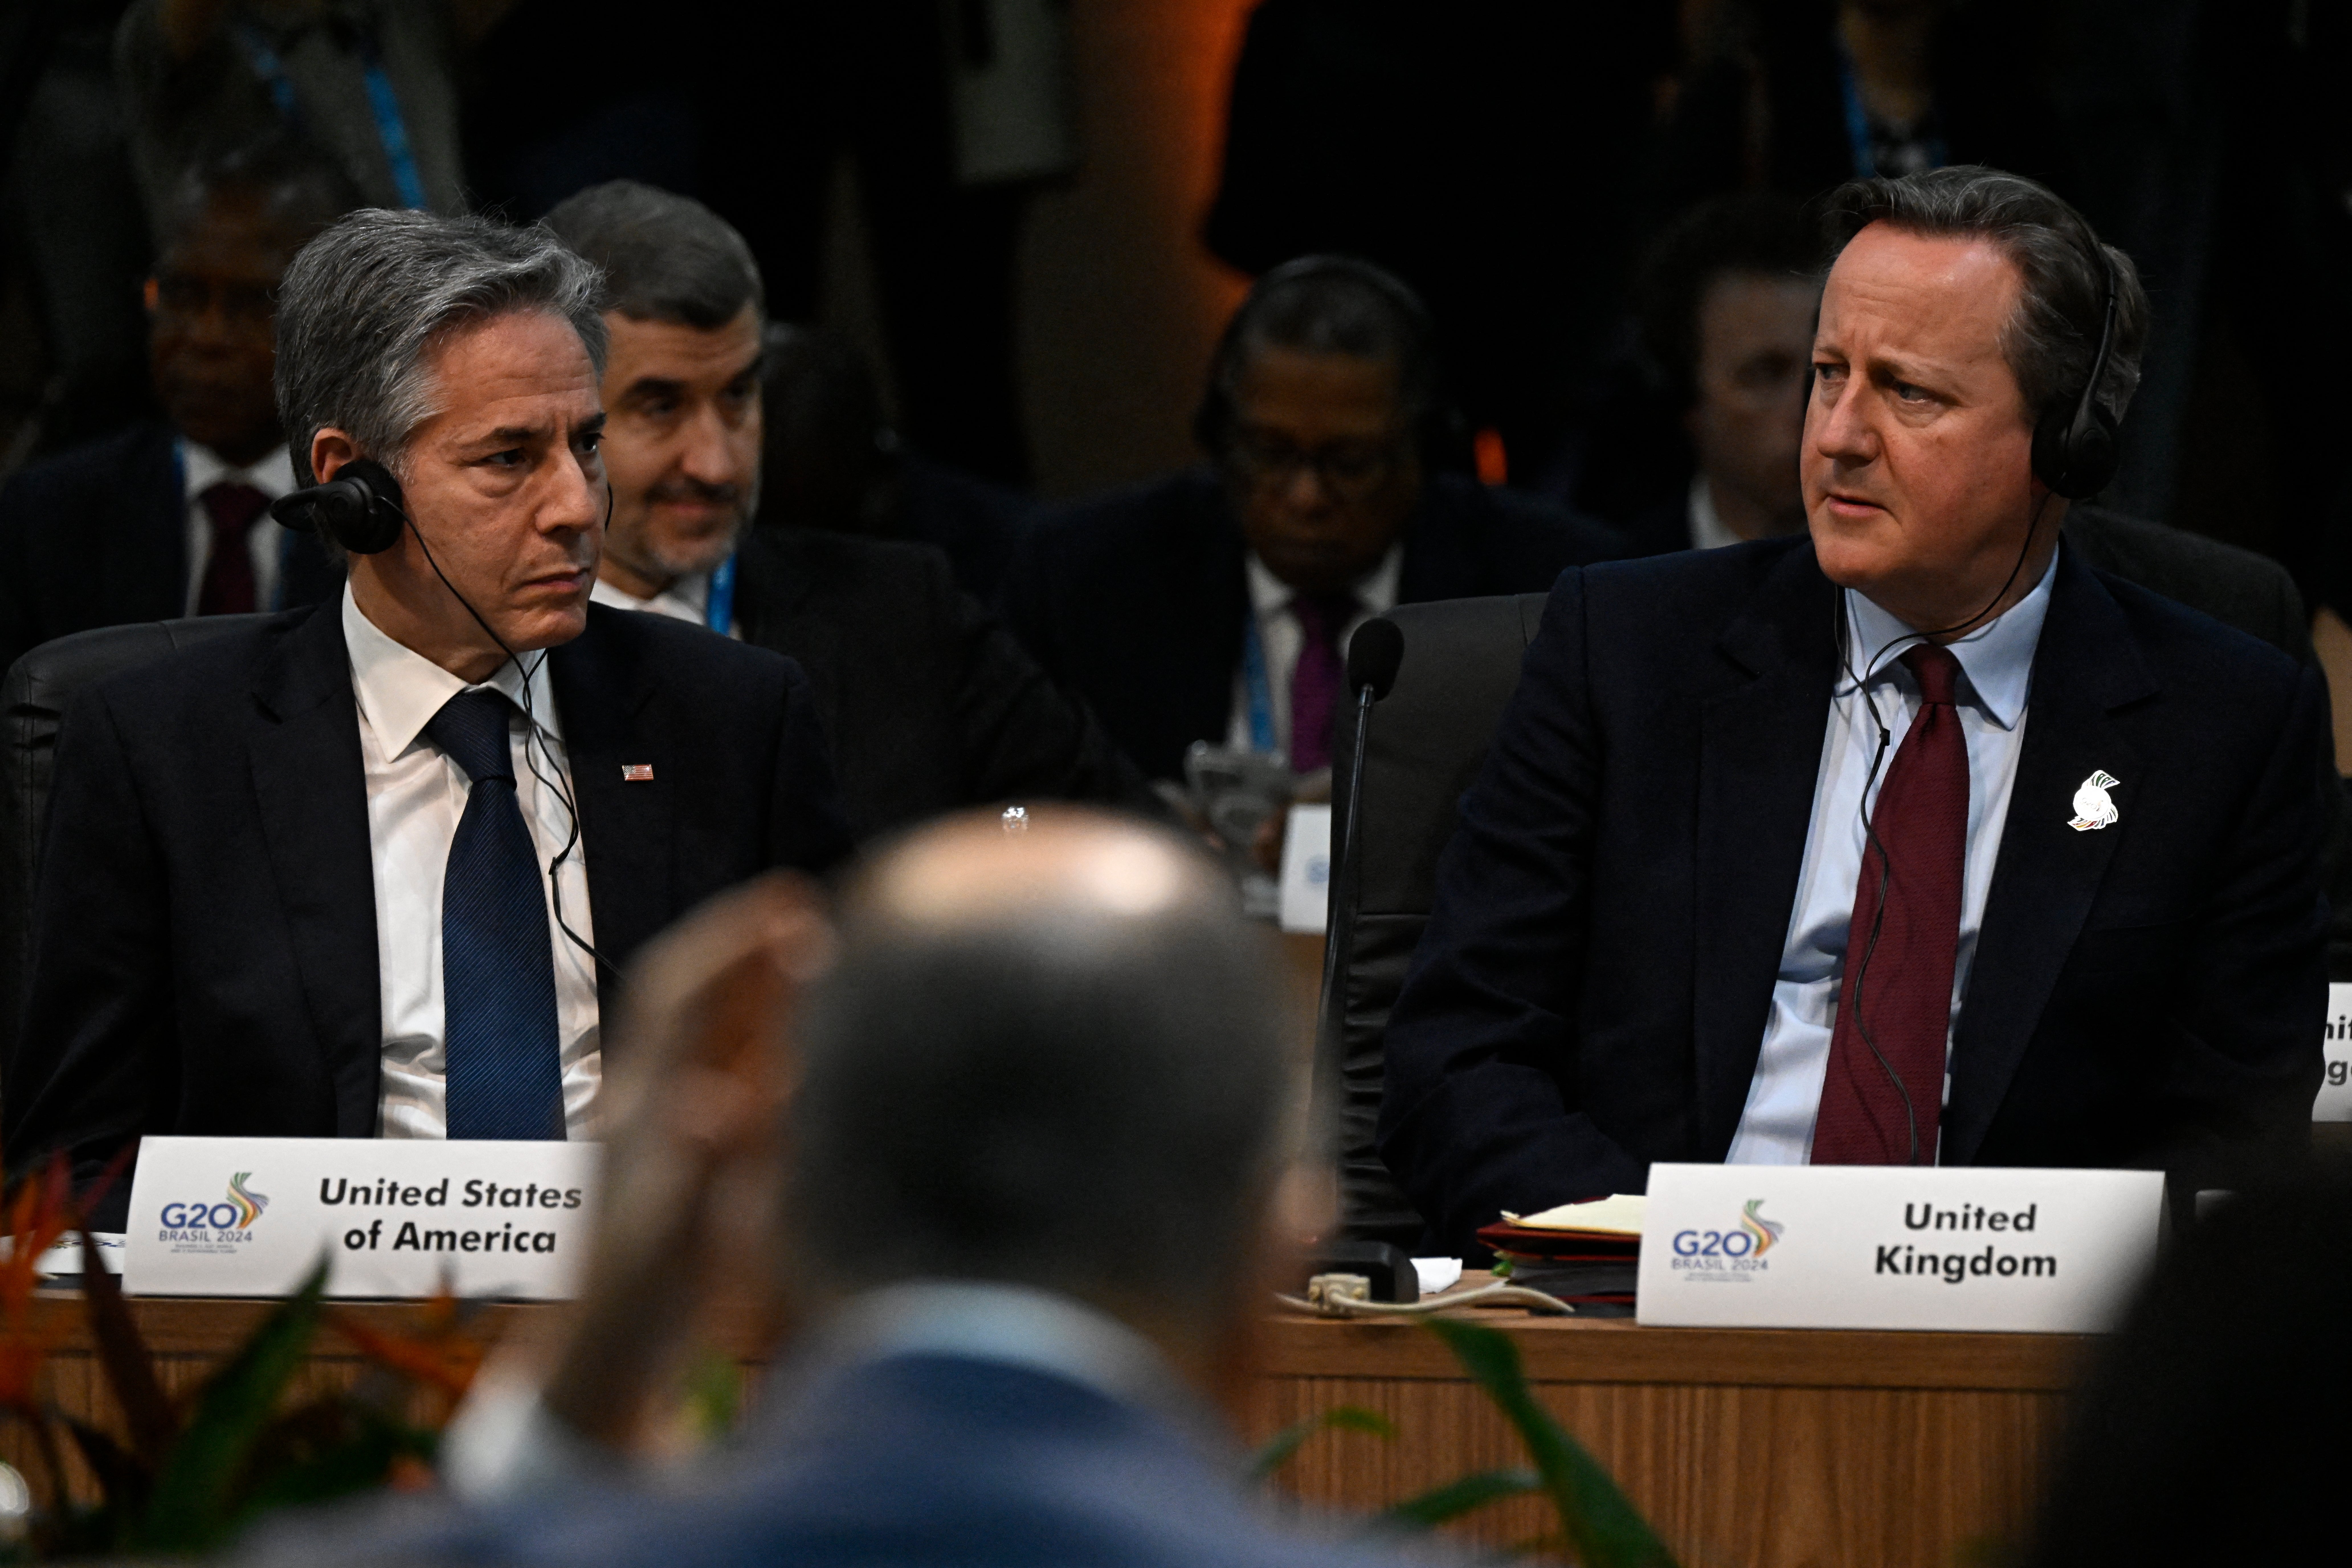 US secretary of state Antony Blinken (left) and Britain’s foreign secretary David Cameron who many think is setting a new tone